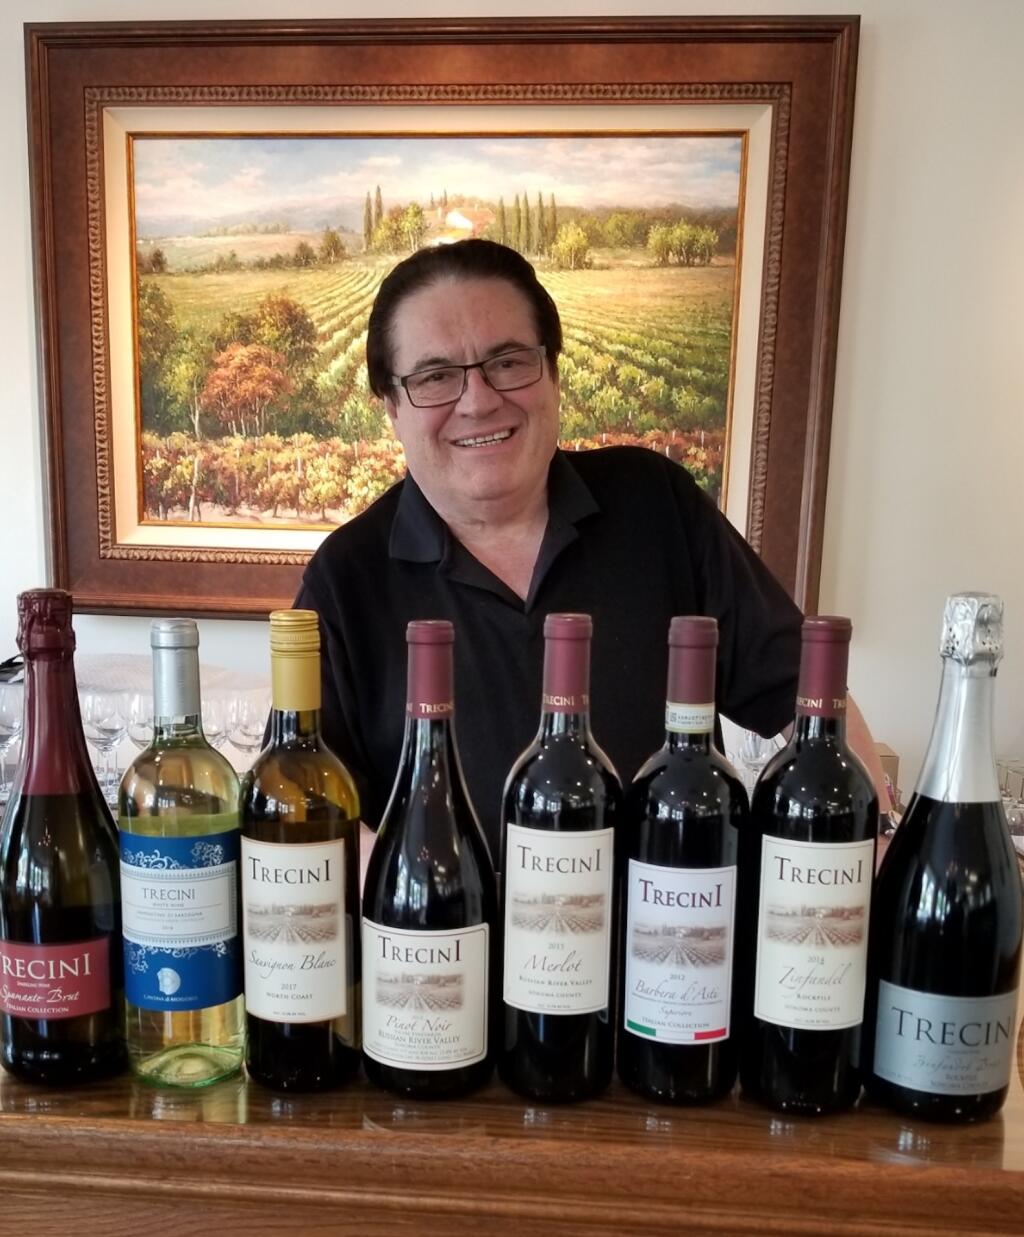 John Vicini, founder of Trecini Winery, shows off his wines at the Santa Rosa tasting room. (Cathleen Vicini)